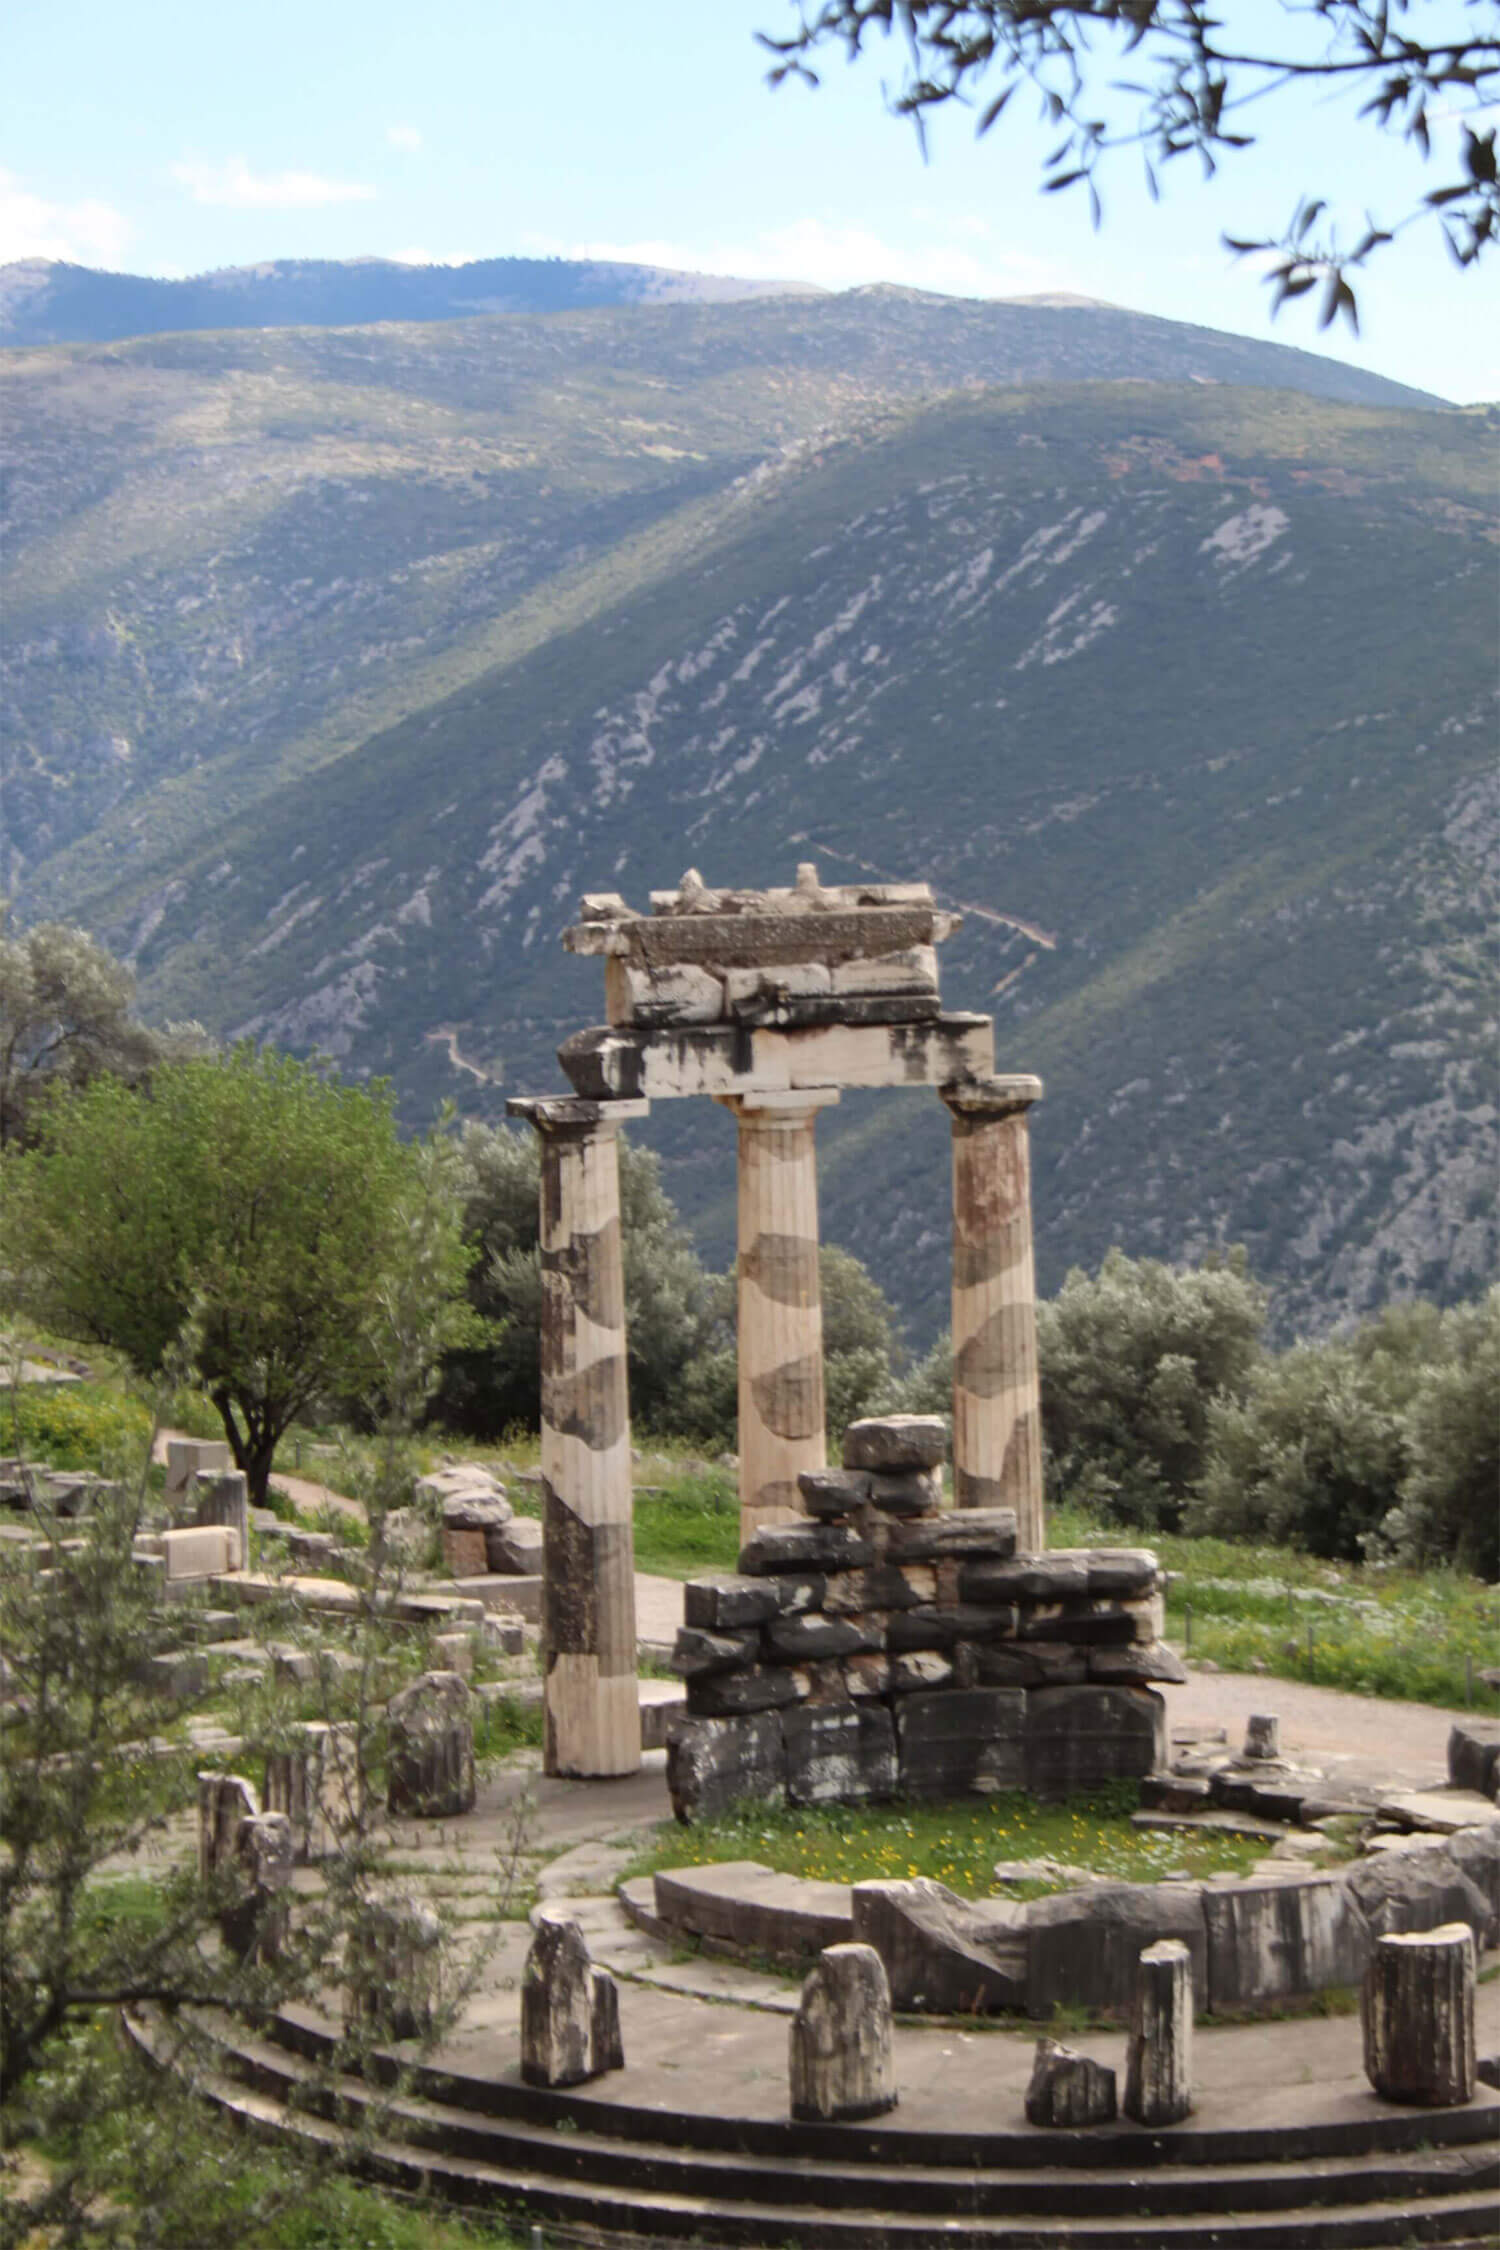 The Tholos of Delphi- A circular temple 2